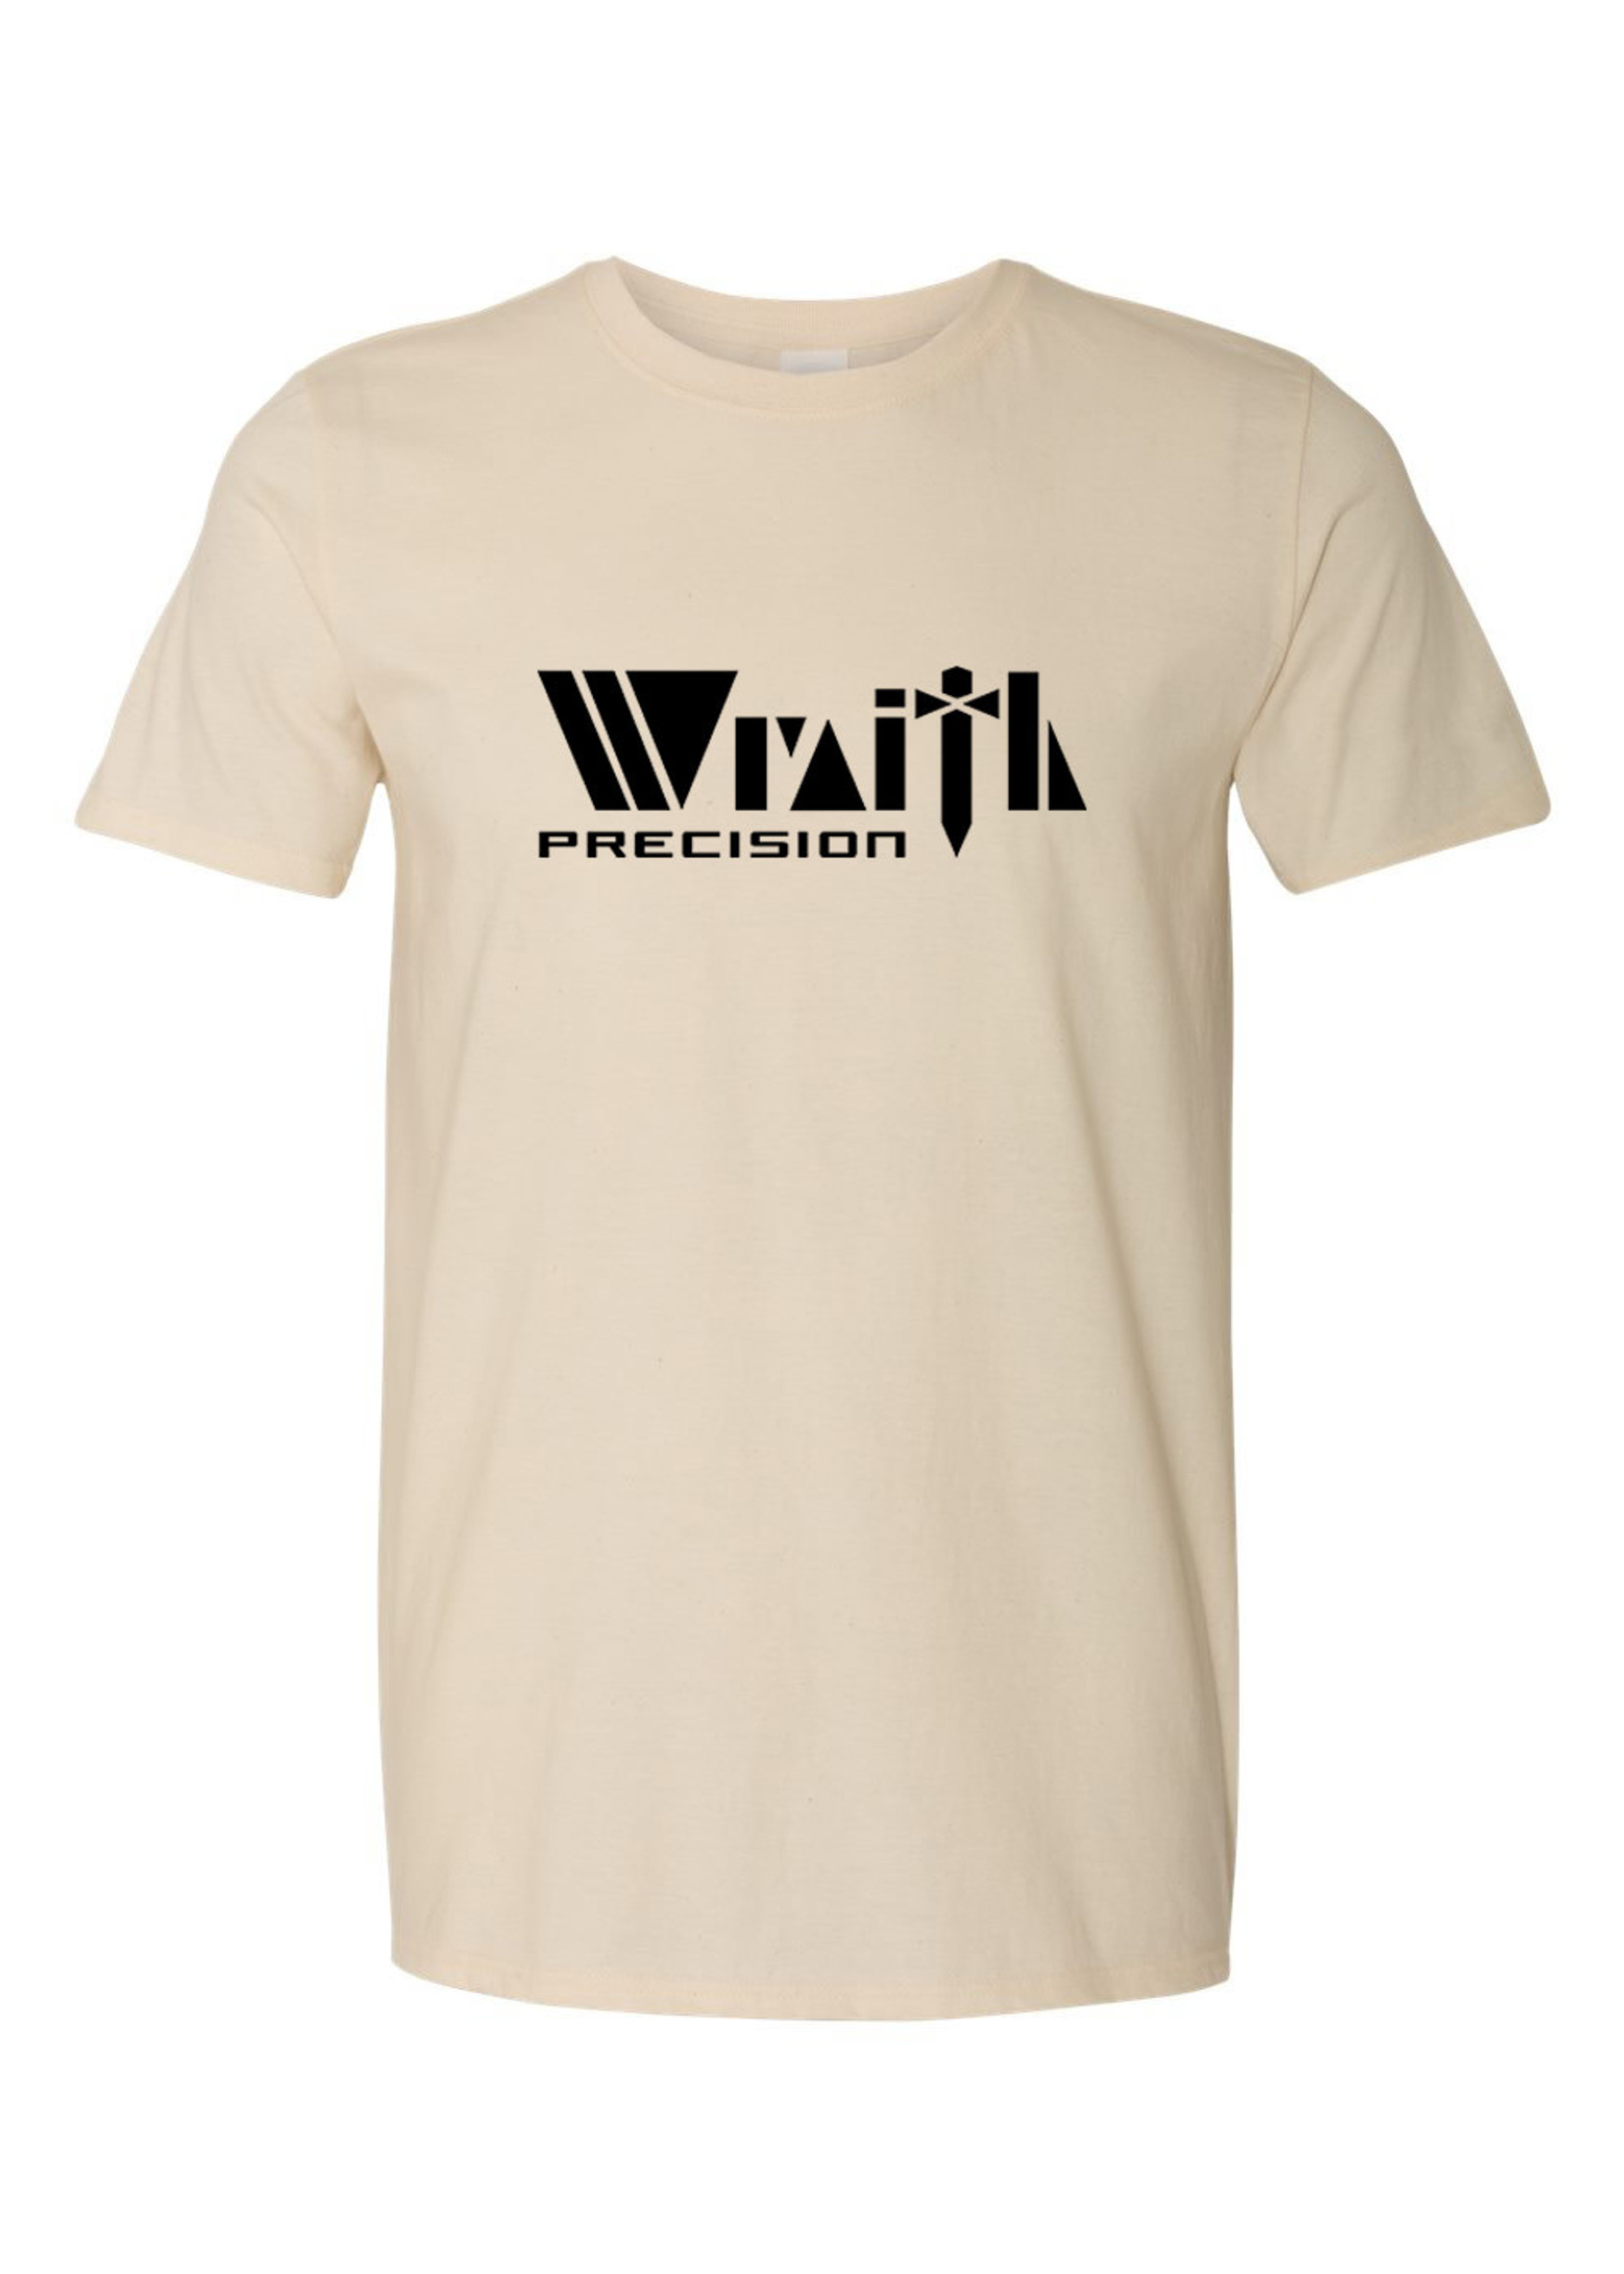 Wraith Precision Wraith Precision TShirts